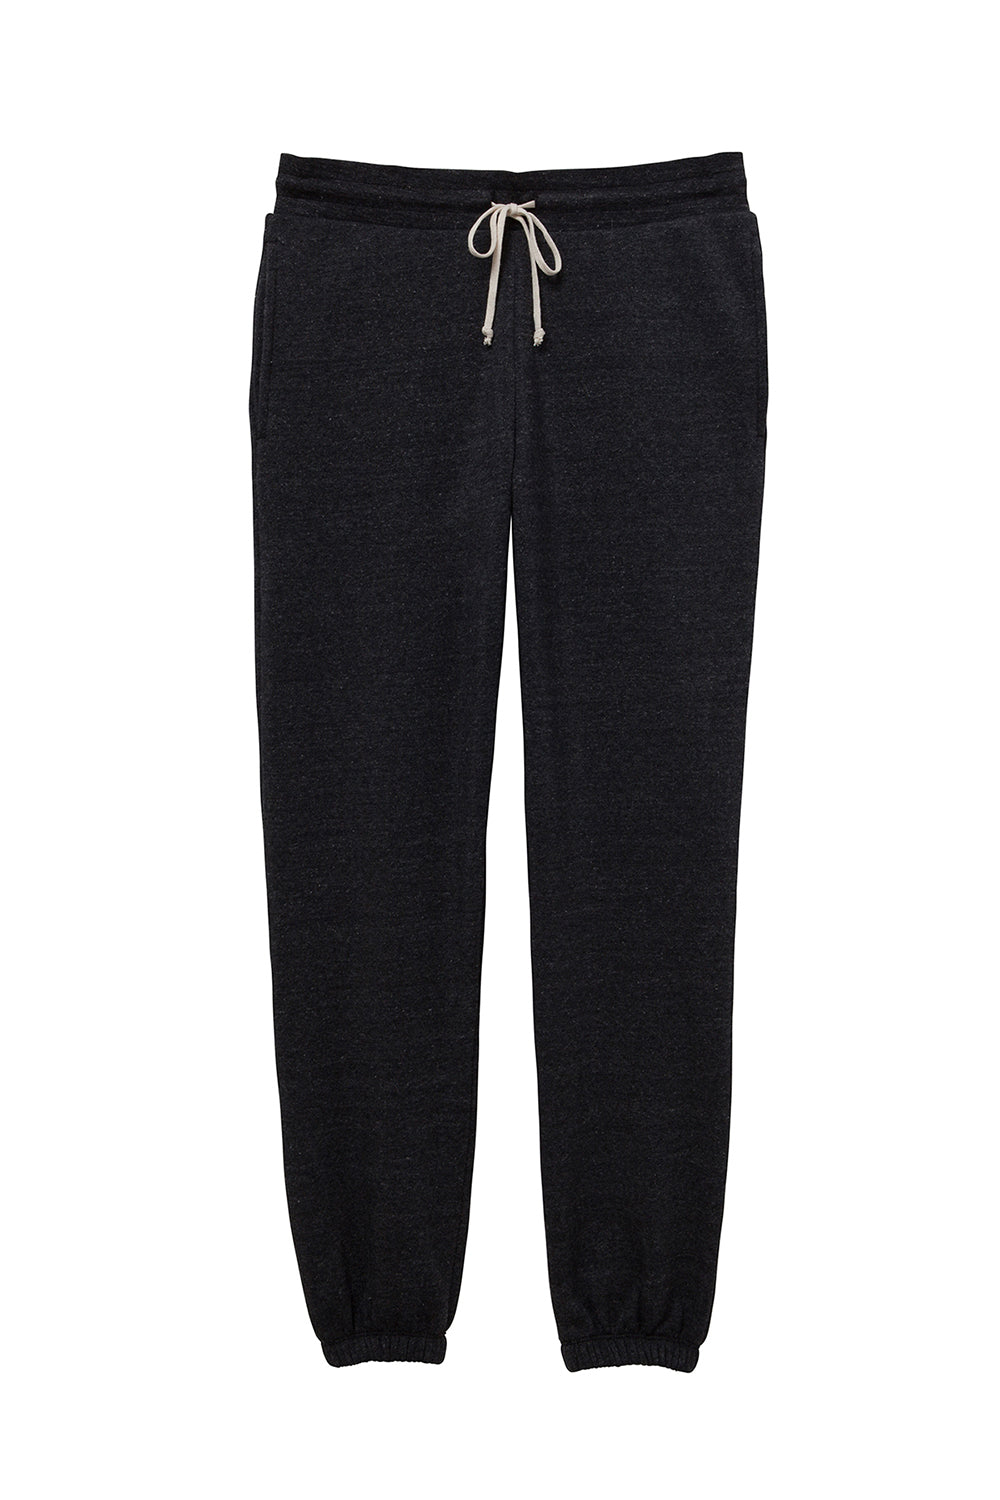 Alternative 9902F2 Womens Eco Classic Sweatpants w/ Pockets Black Flat Front